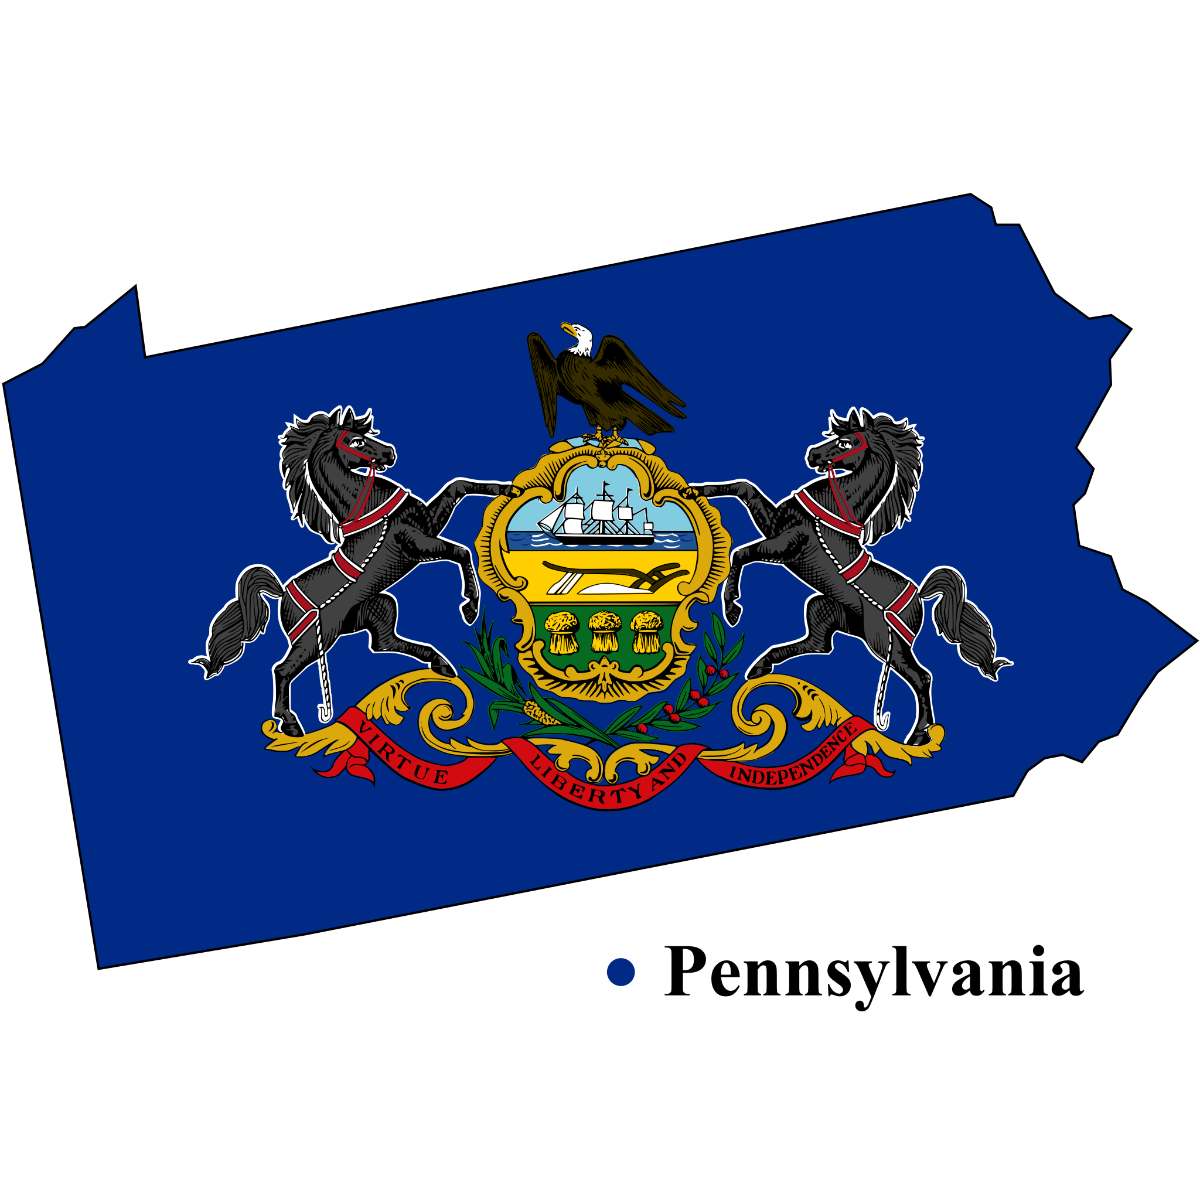 Pennsylvania State map cutout with Pennsylvania flag superimposed